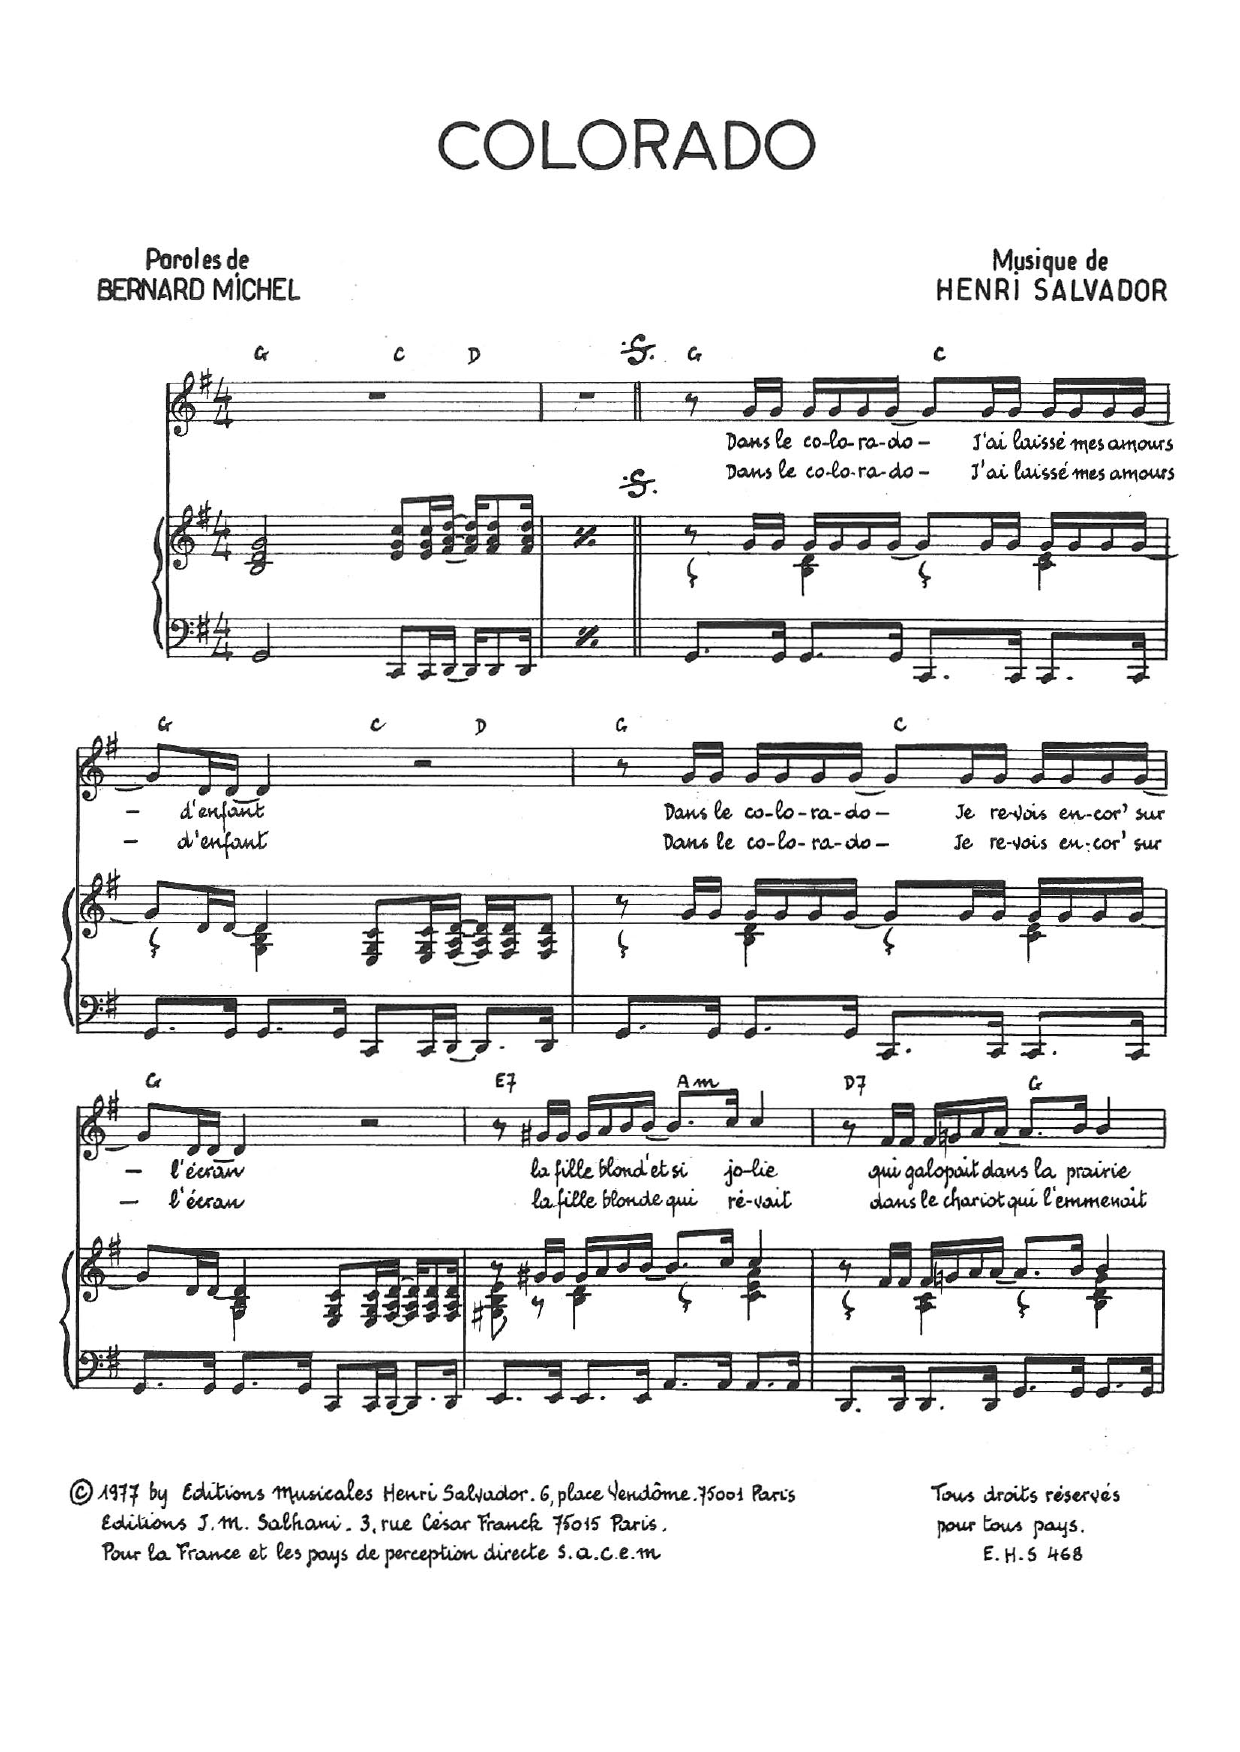 Henri Salvador Colorado Sheet Music Notes & Chords for Piano & Vocal - Download or Print PDF